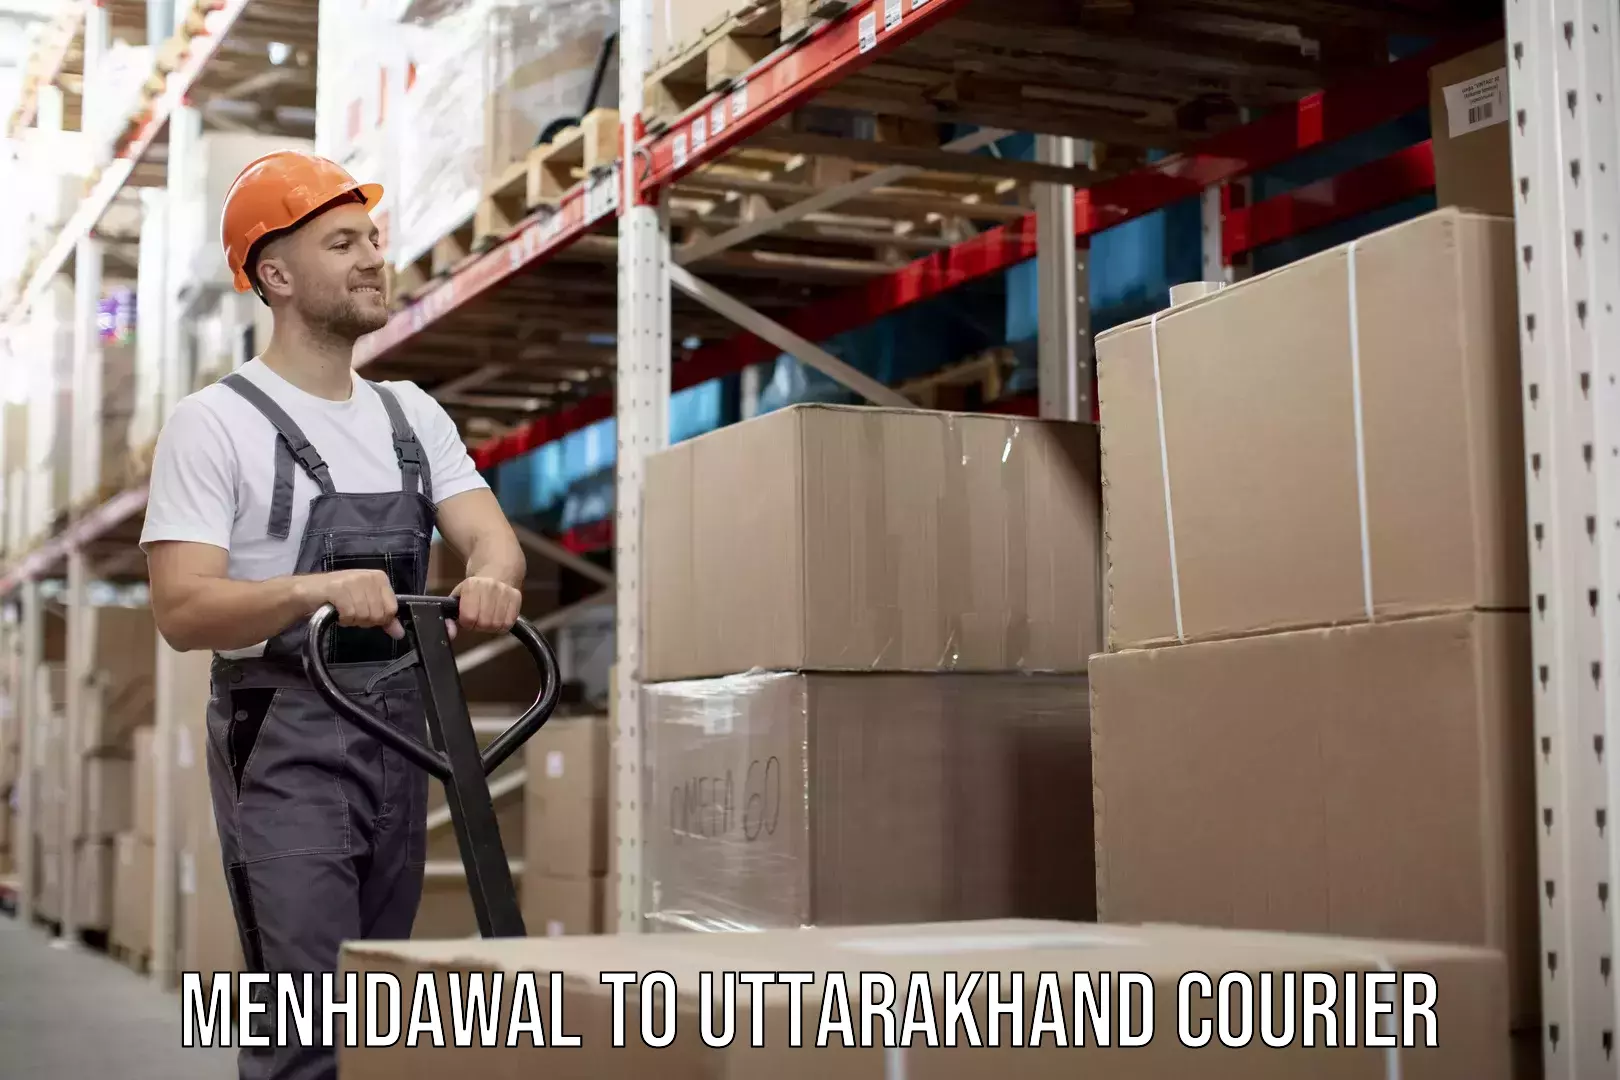 Furniture delivery service Menhdawal to Uttarakhand